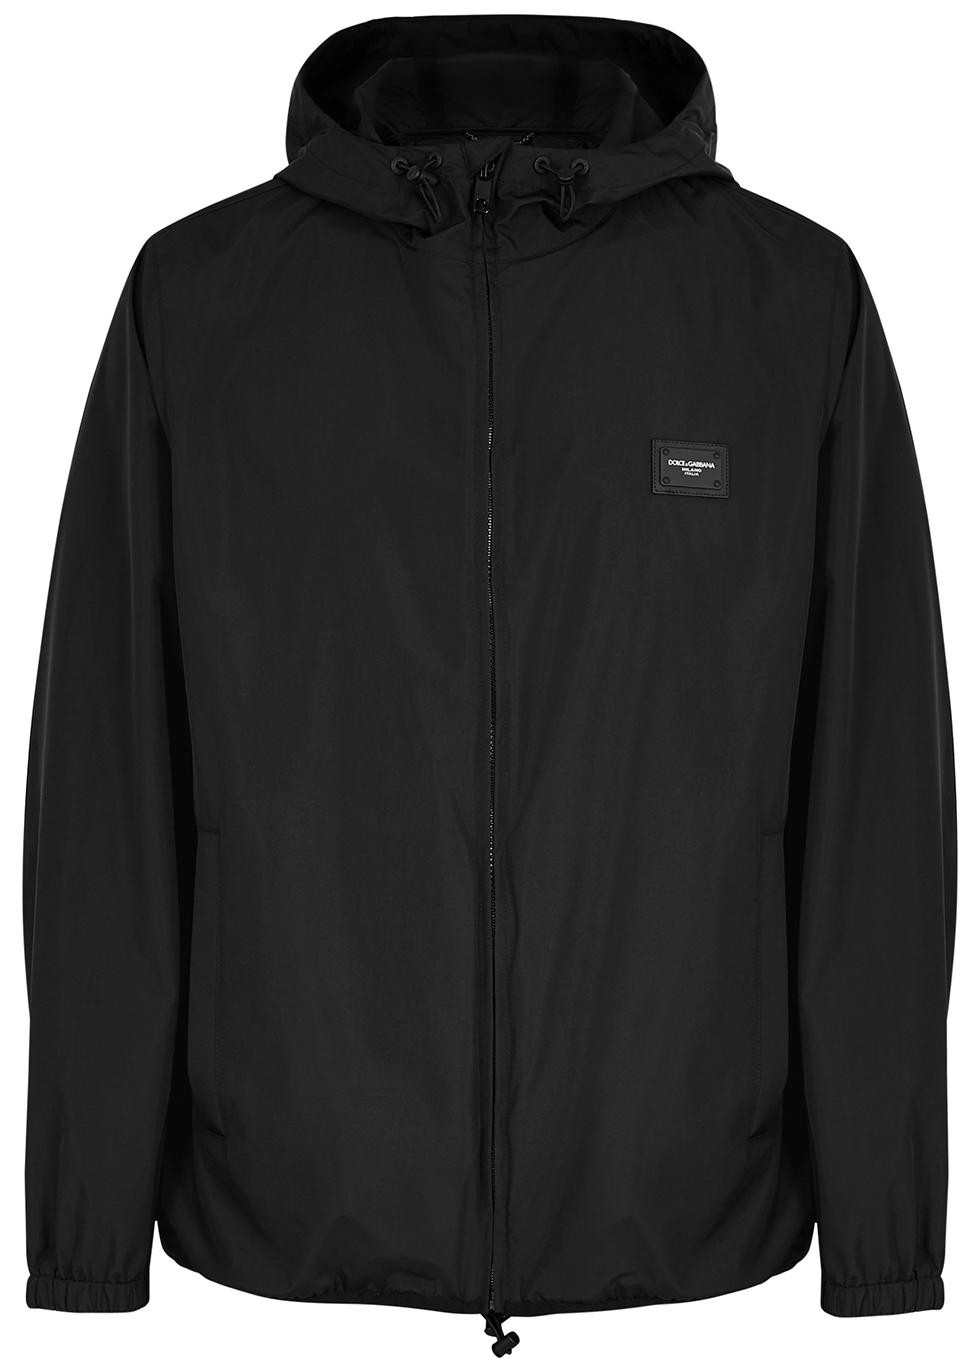 Black logo shell jacket